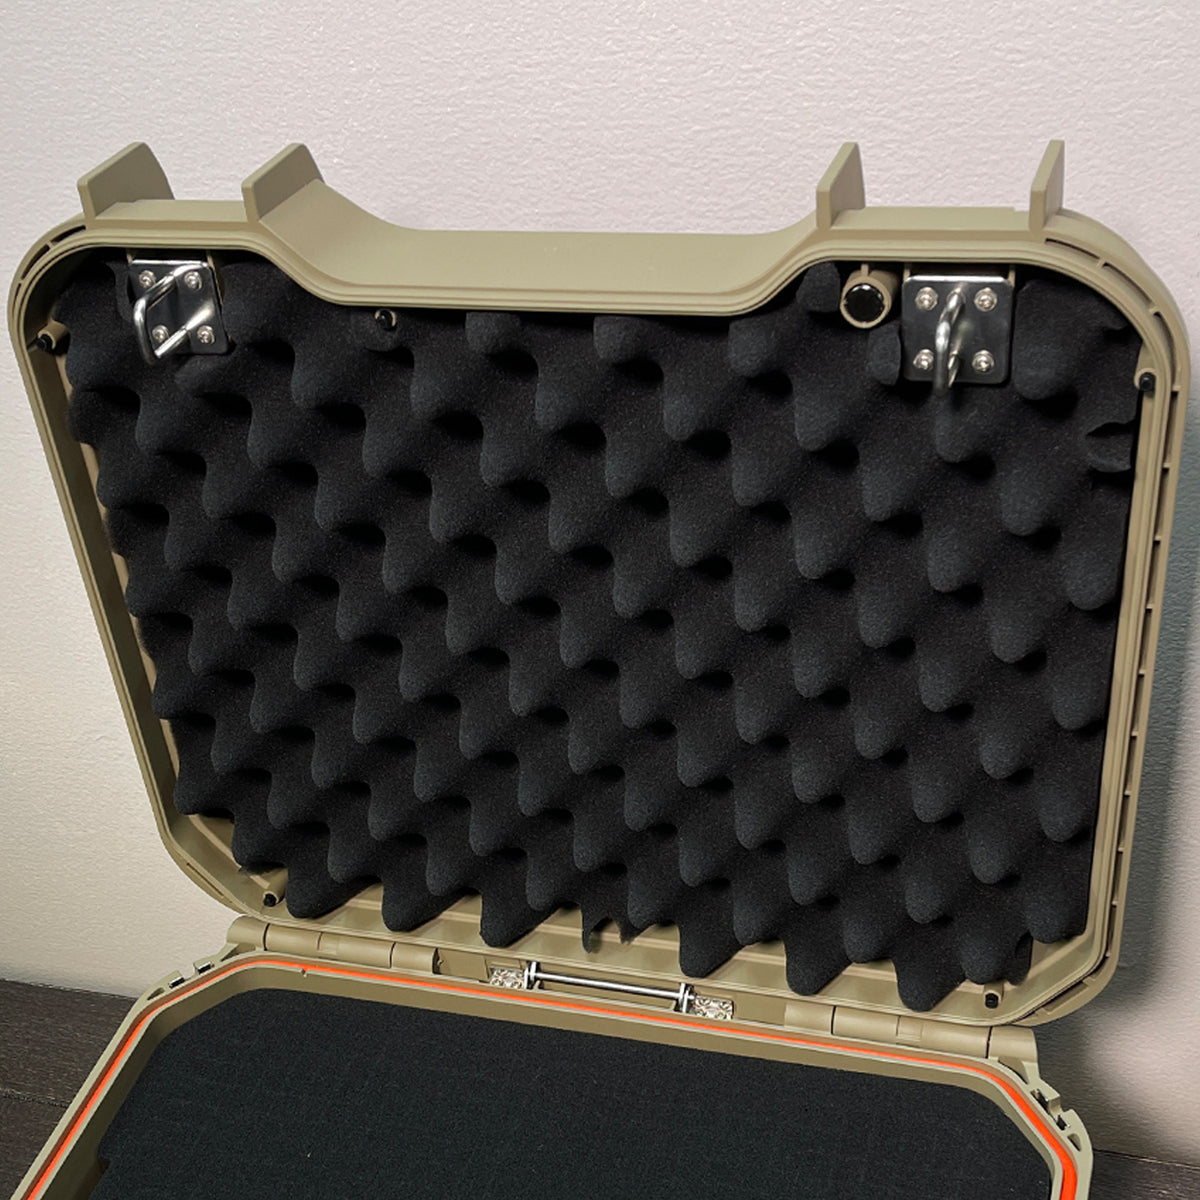 Vaultek Lifepod XT Crate Foam For Cover XT-FM2 Installed